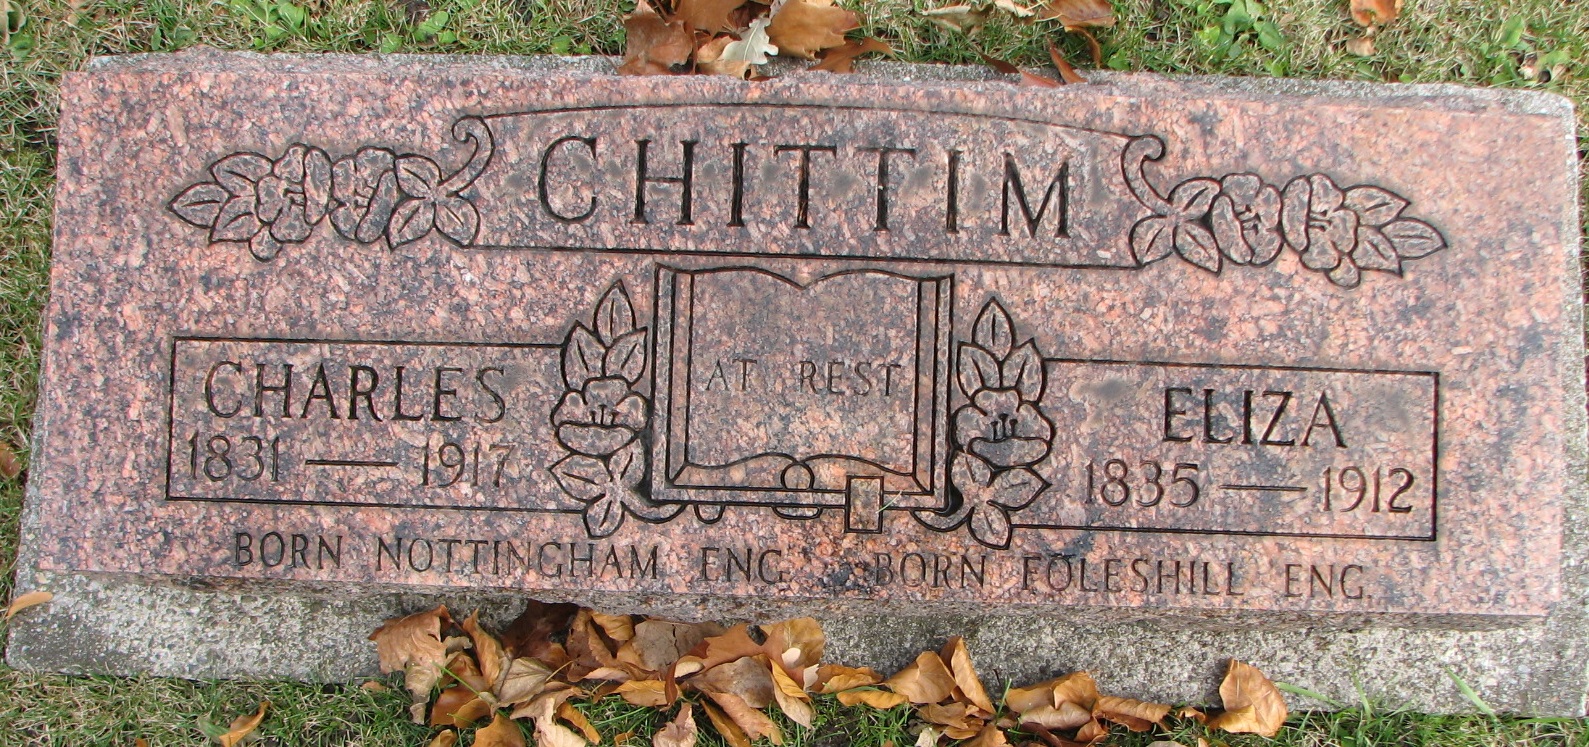 Charles CHITTIM 1831-1917 Eliza Chittim 1835-1912 Sec C Row 3